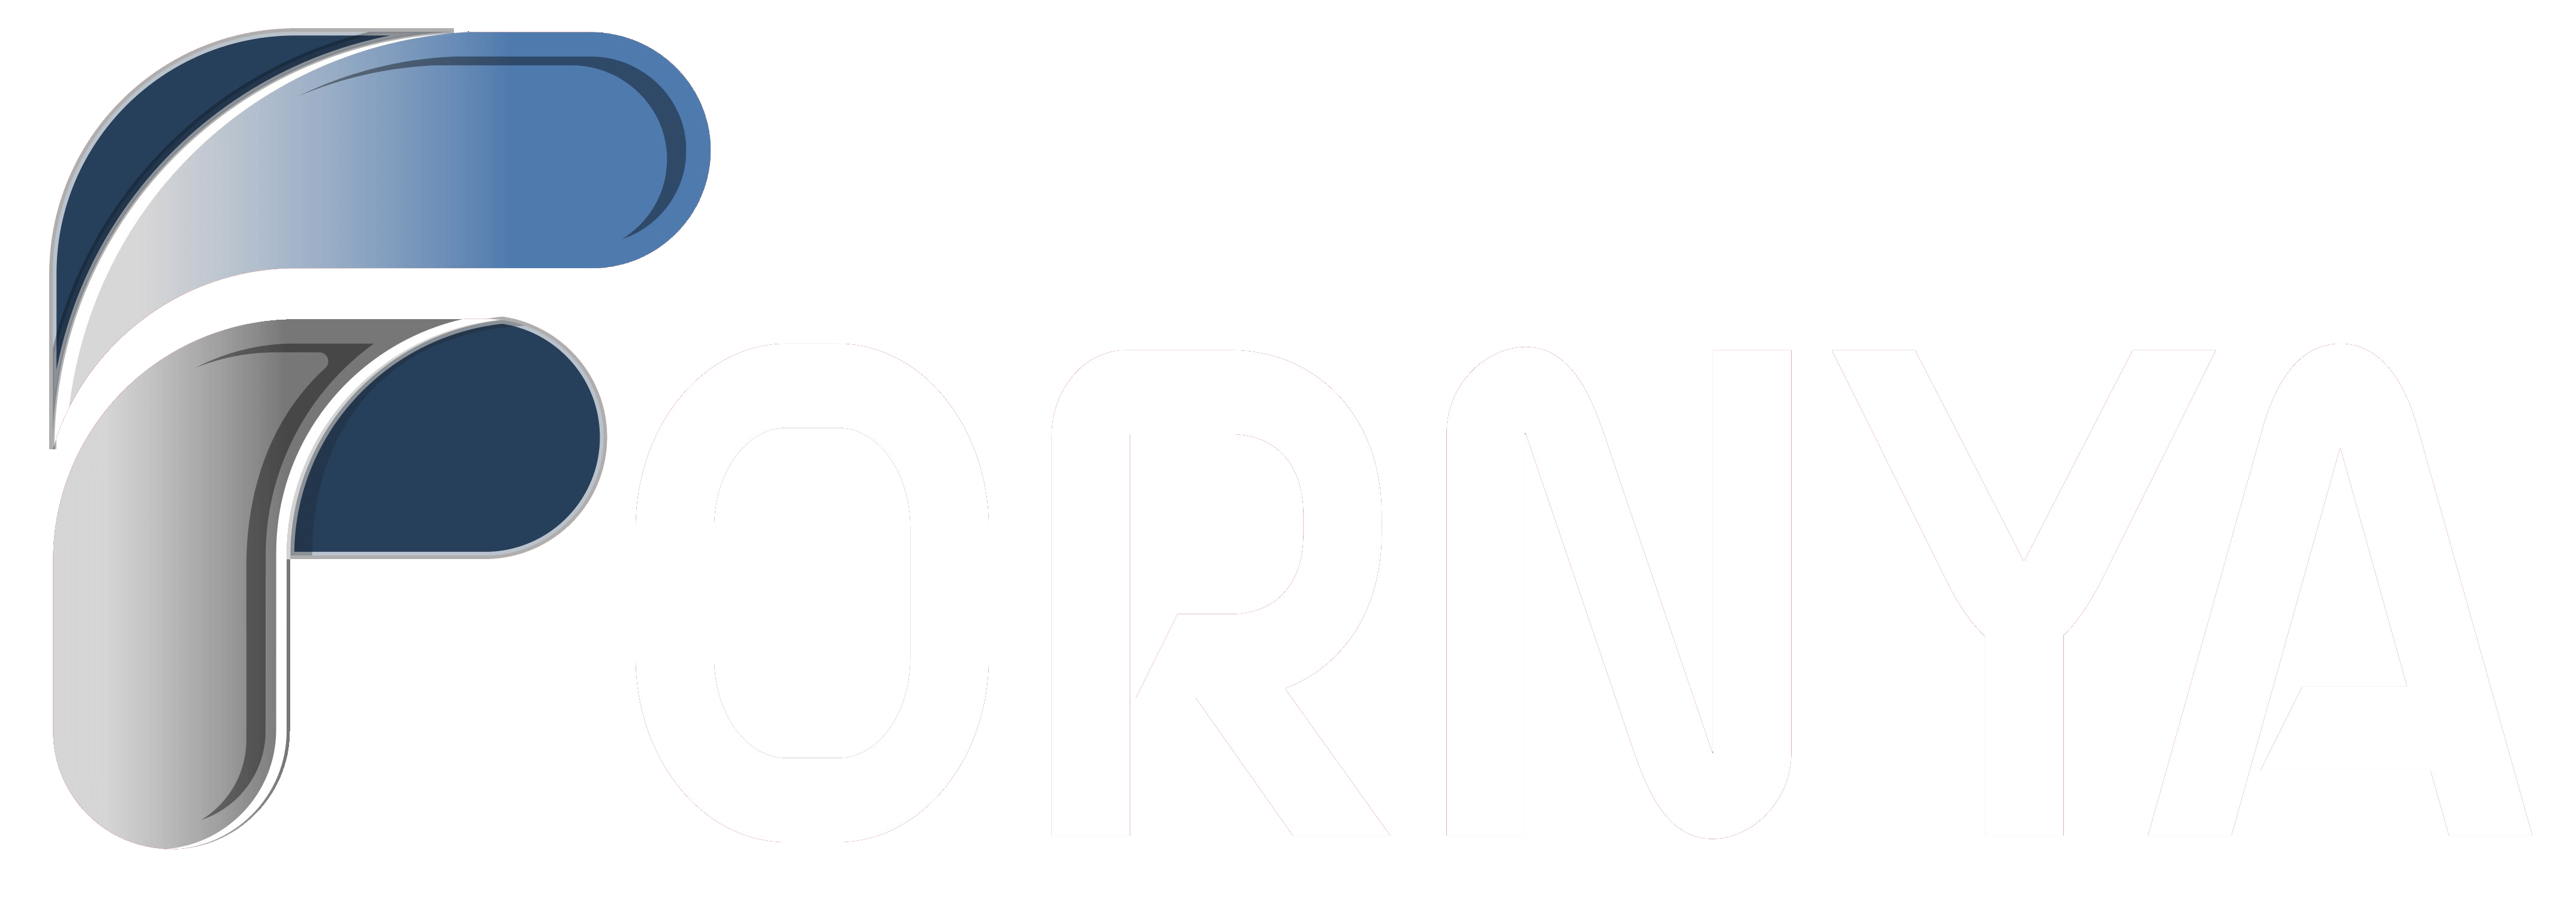 Fornya logo